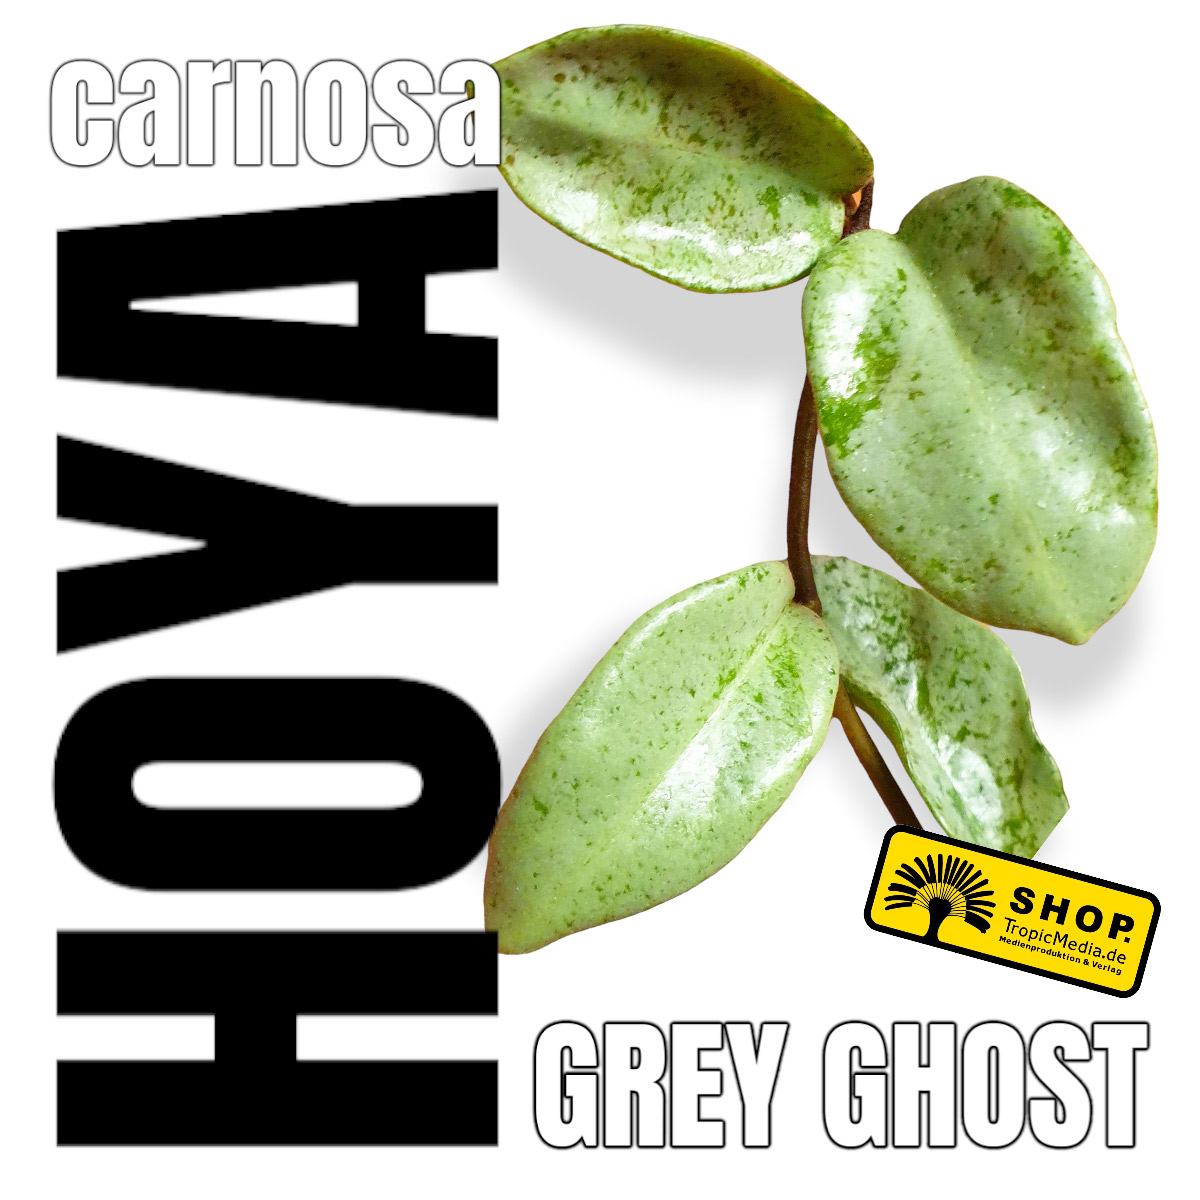 Hoya carnosa GRAY GHOST